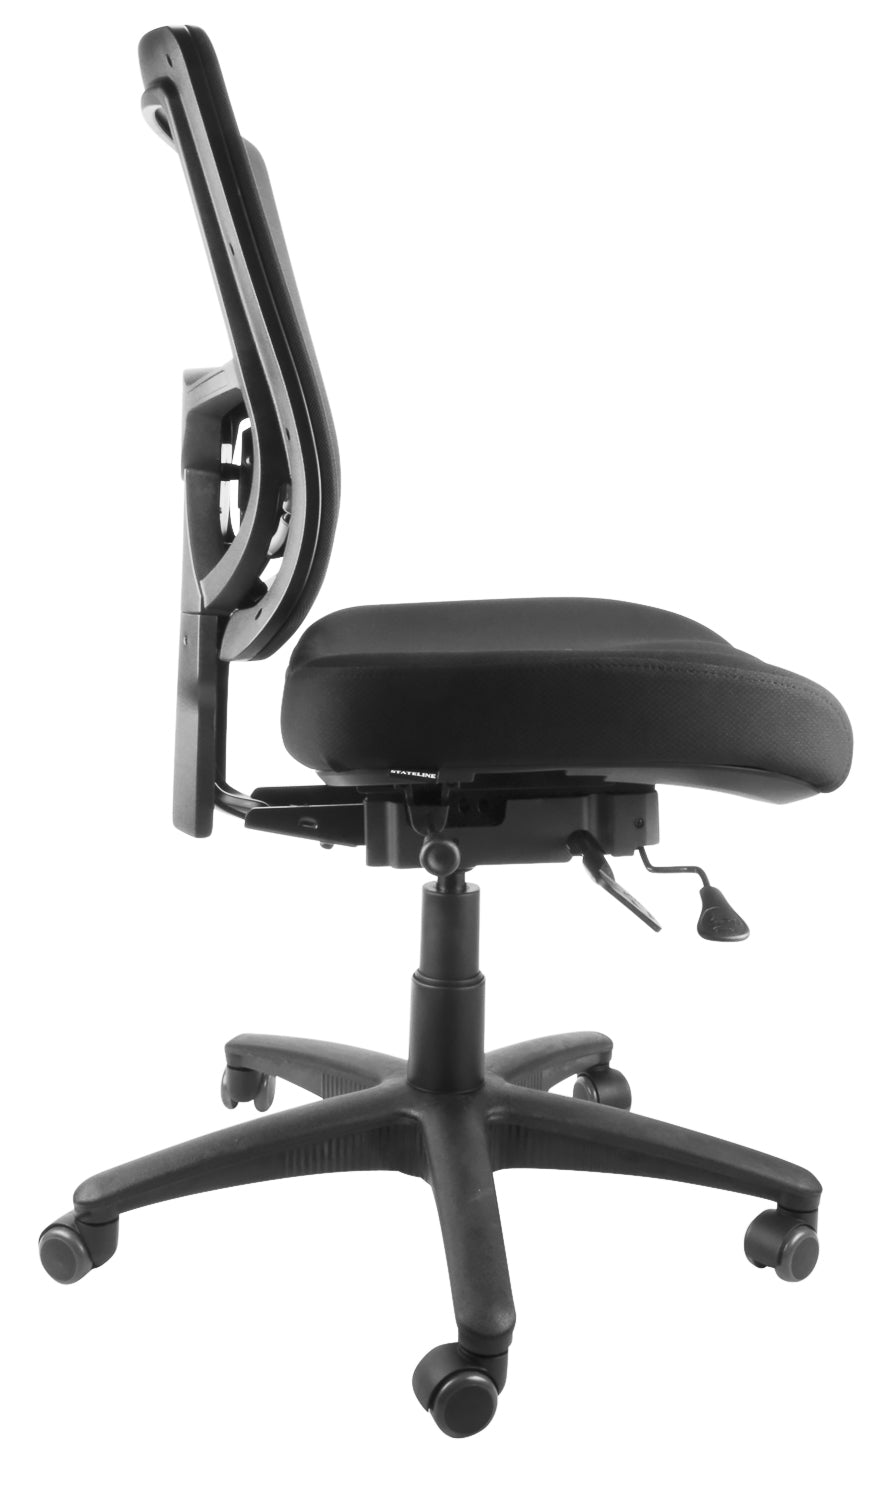 Siena Ergo Mesh Office Desk Chair